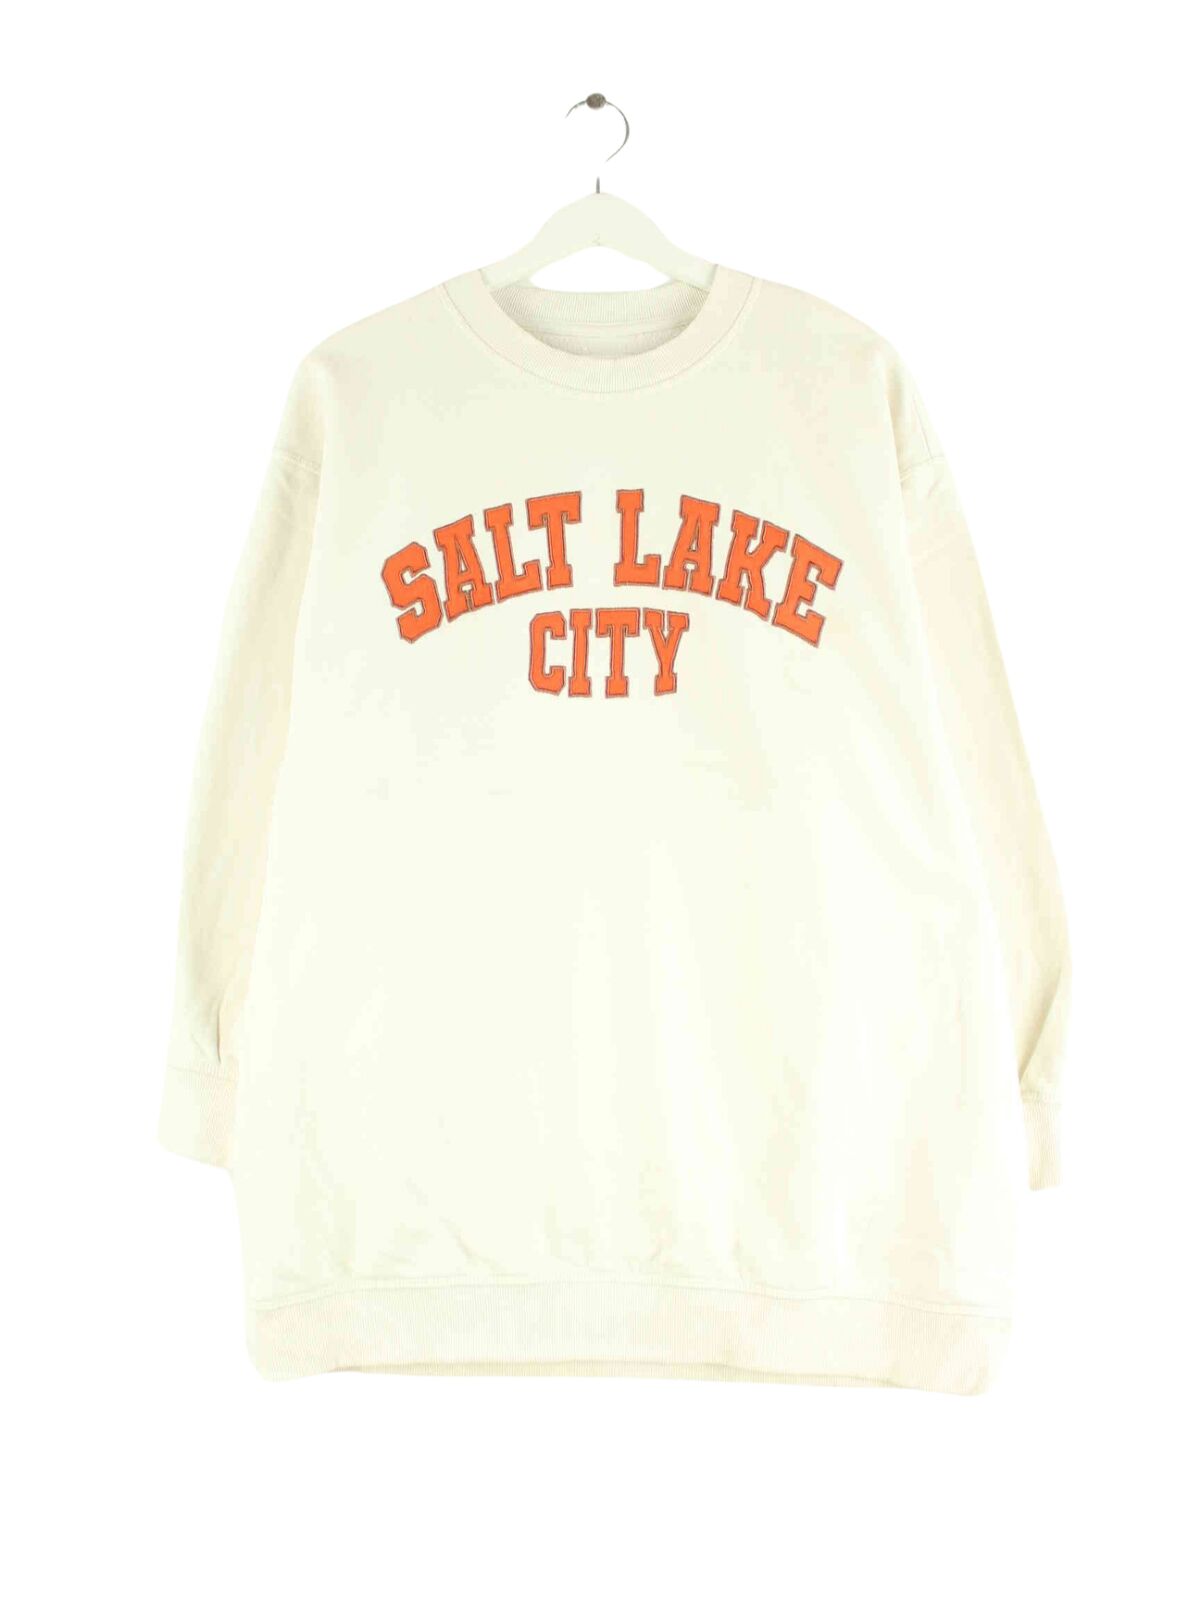 Vintage Salt Lake City Embroidered Sweater Beige M (front image)